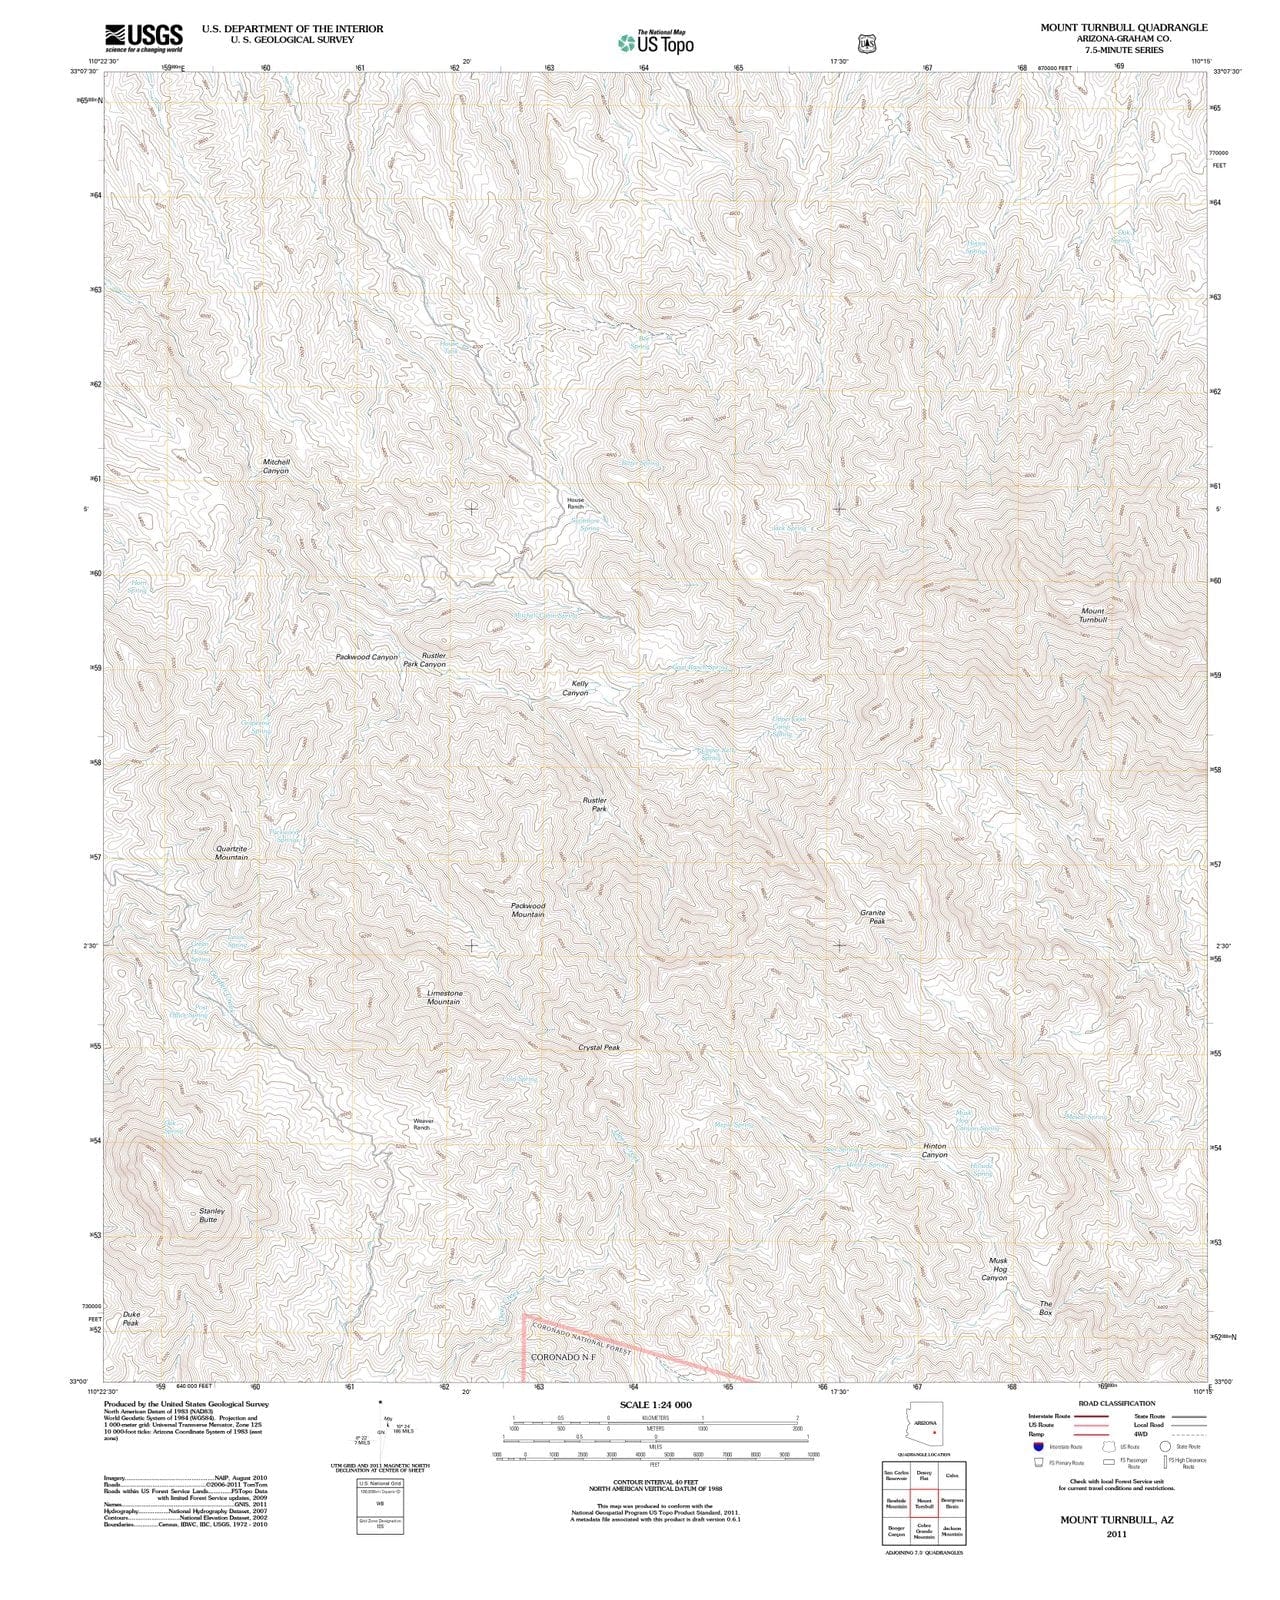 2011 Mount Turnbull, AZ - Arizona - USGS Topographic Map